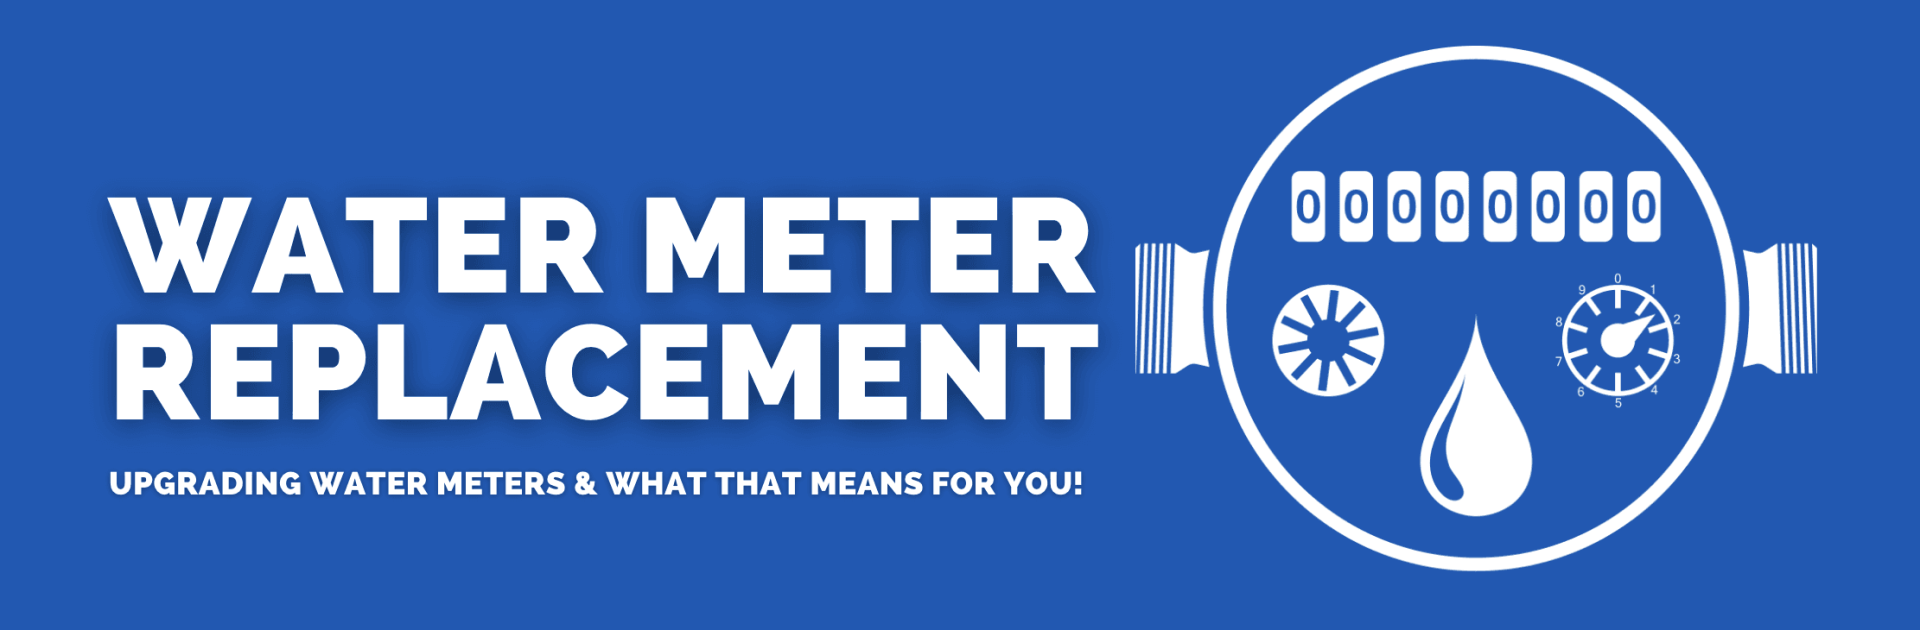 Water meter replacement